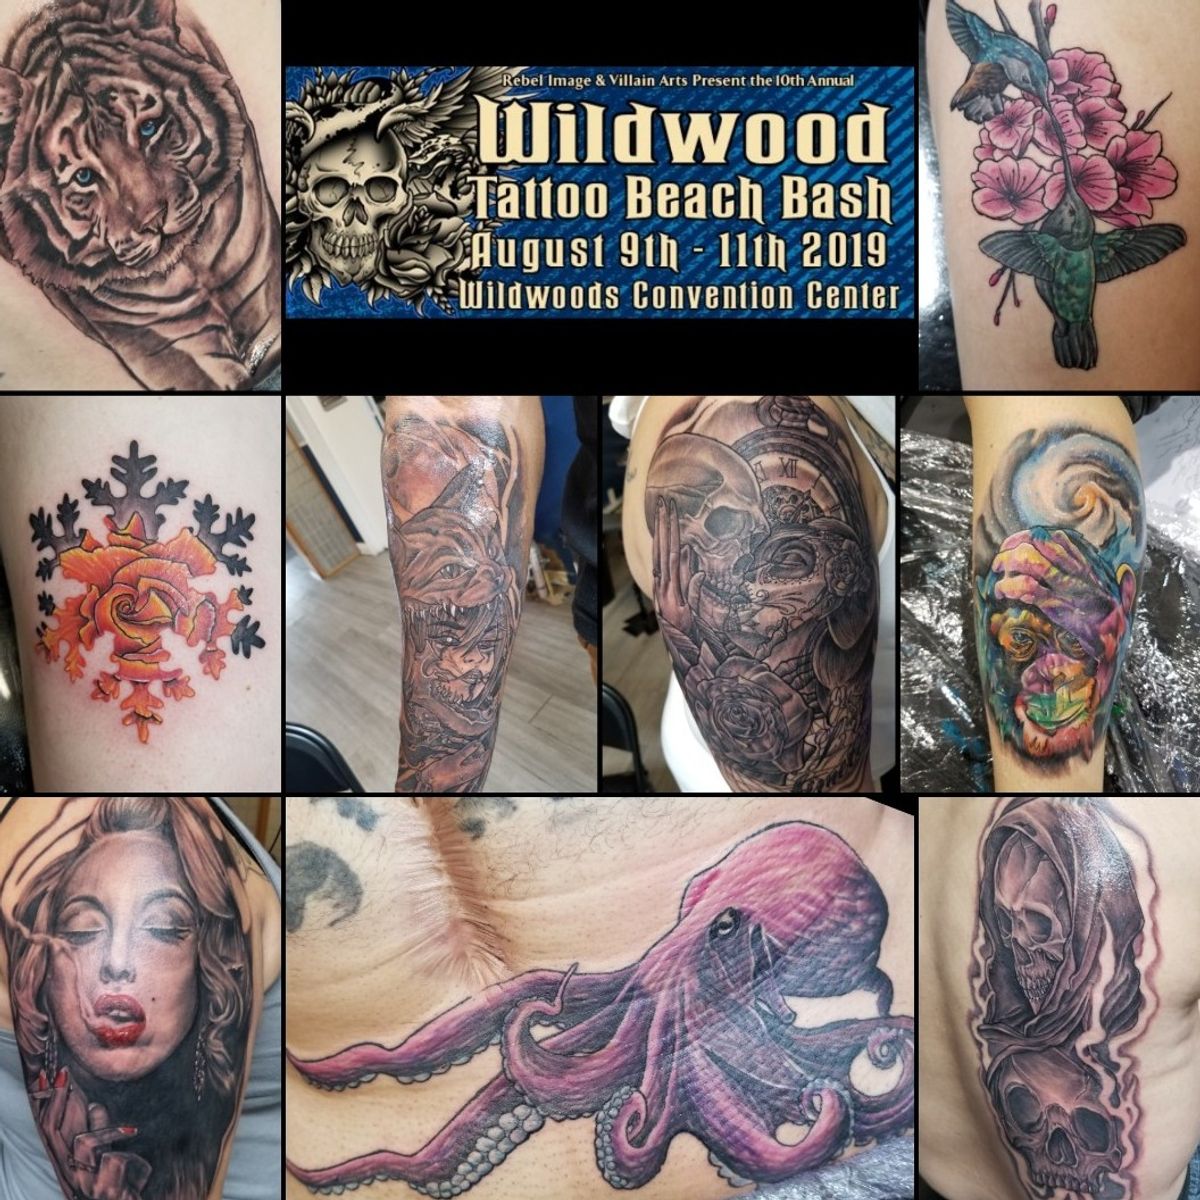 Tattoo uploaded by Rodney Savage • Working Wildwood Tattoo Beach Bash